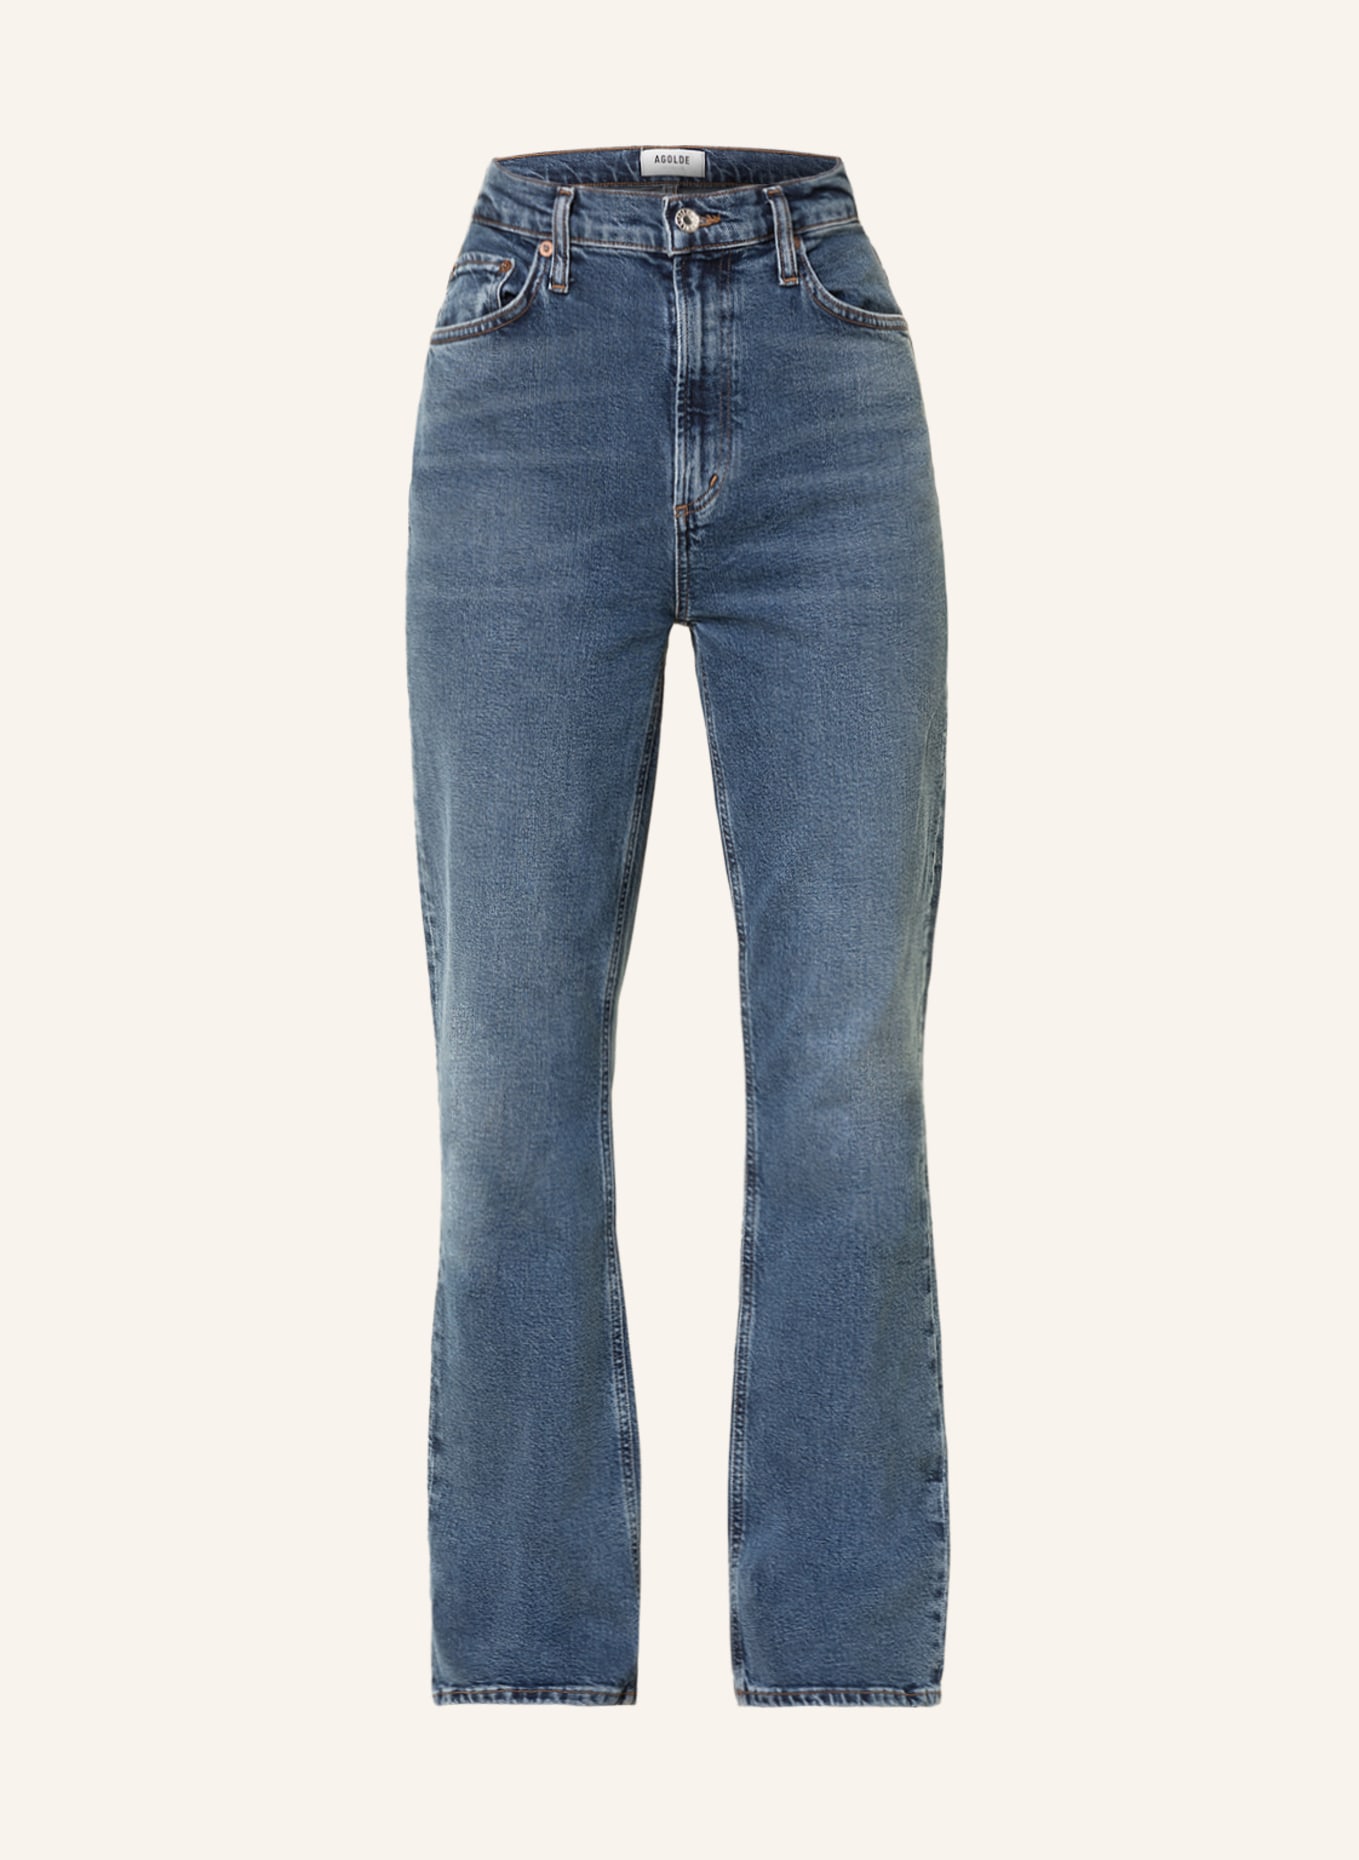 AGOLDE Straight Jeans VINTAGE BOOT, Farbe: Prophecy dk indigo w/tint (Bild 1)